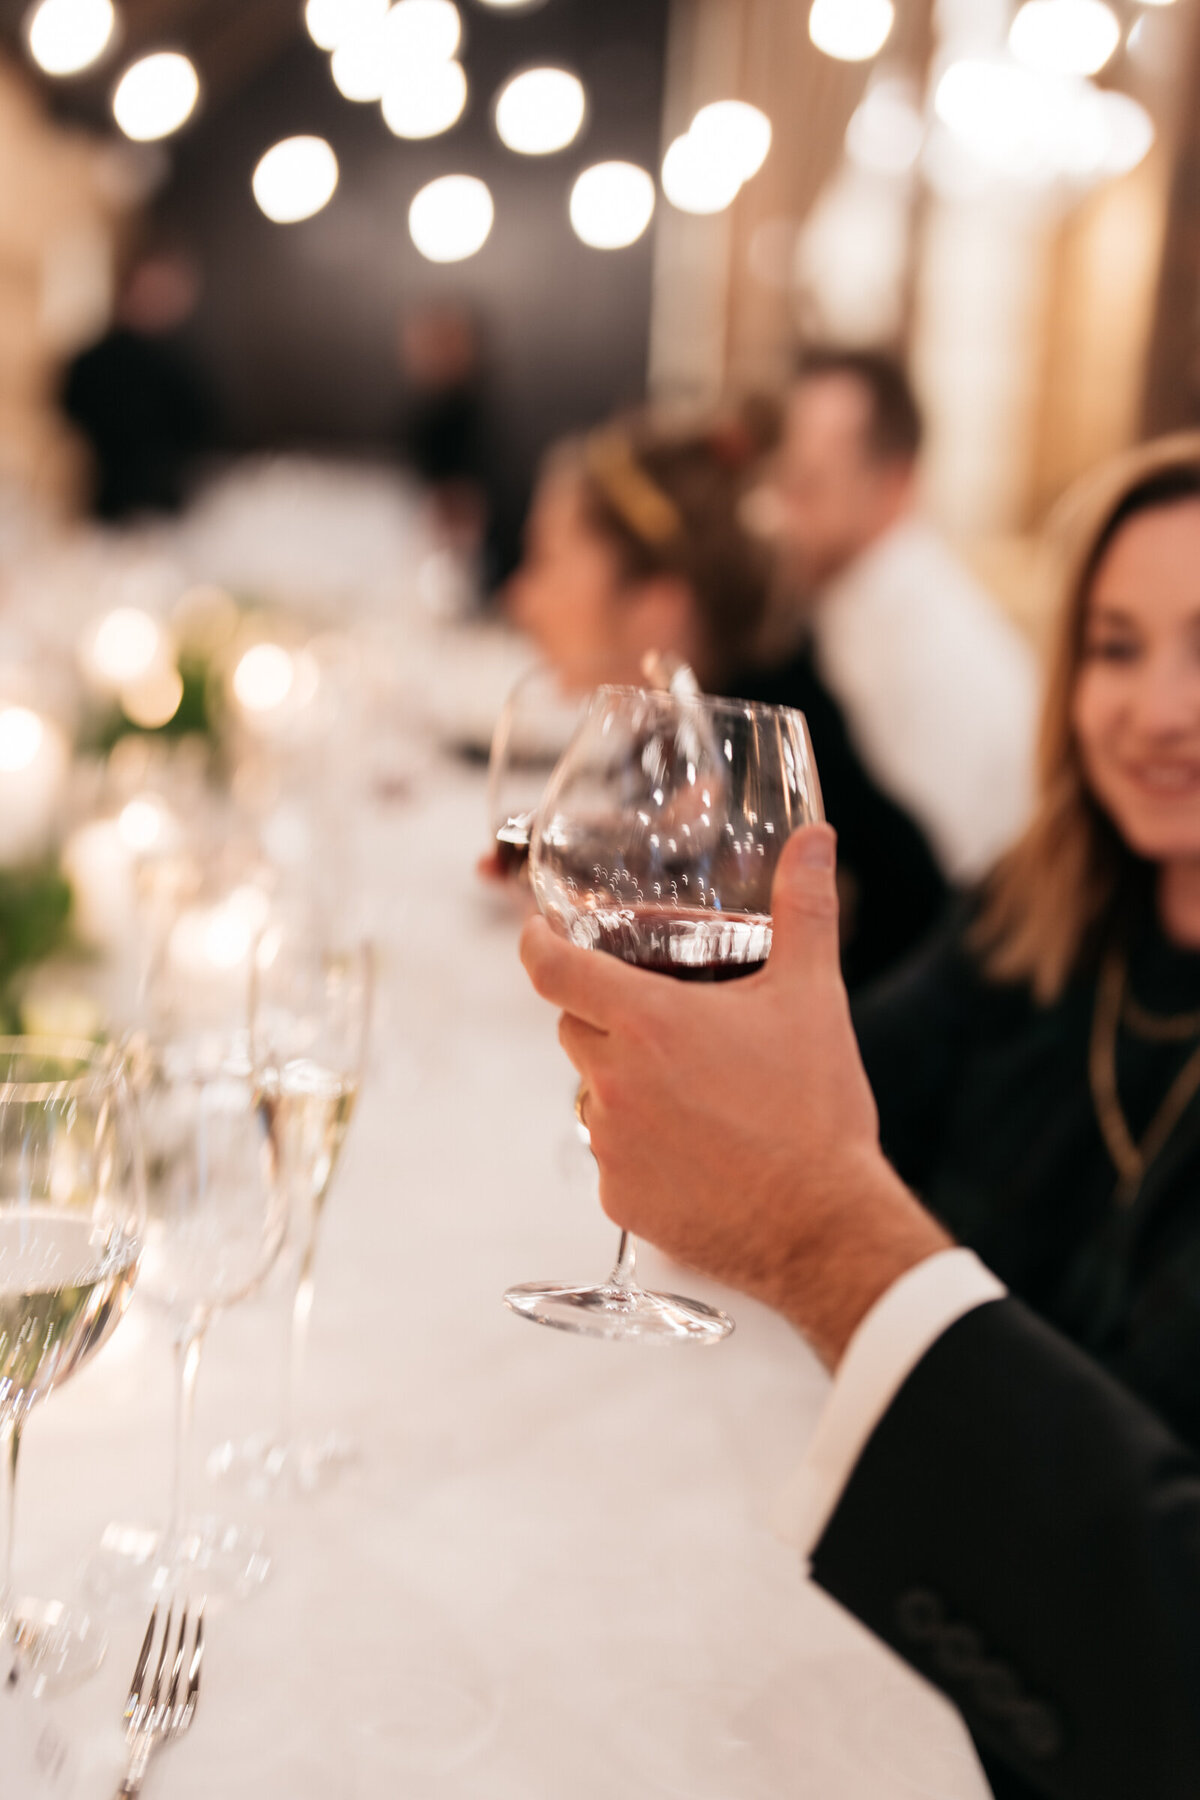 couple toasting wine glasses at wedding reception